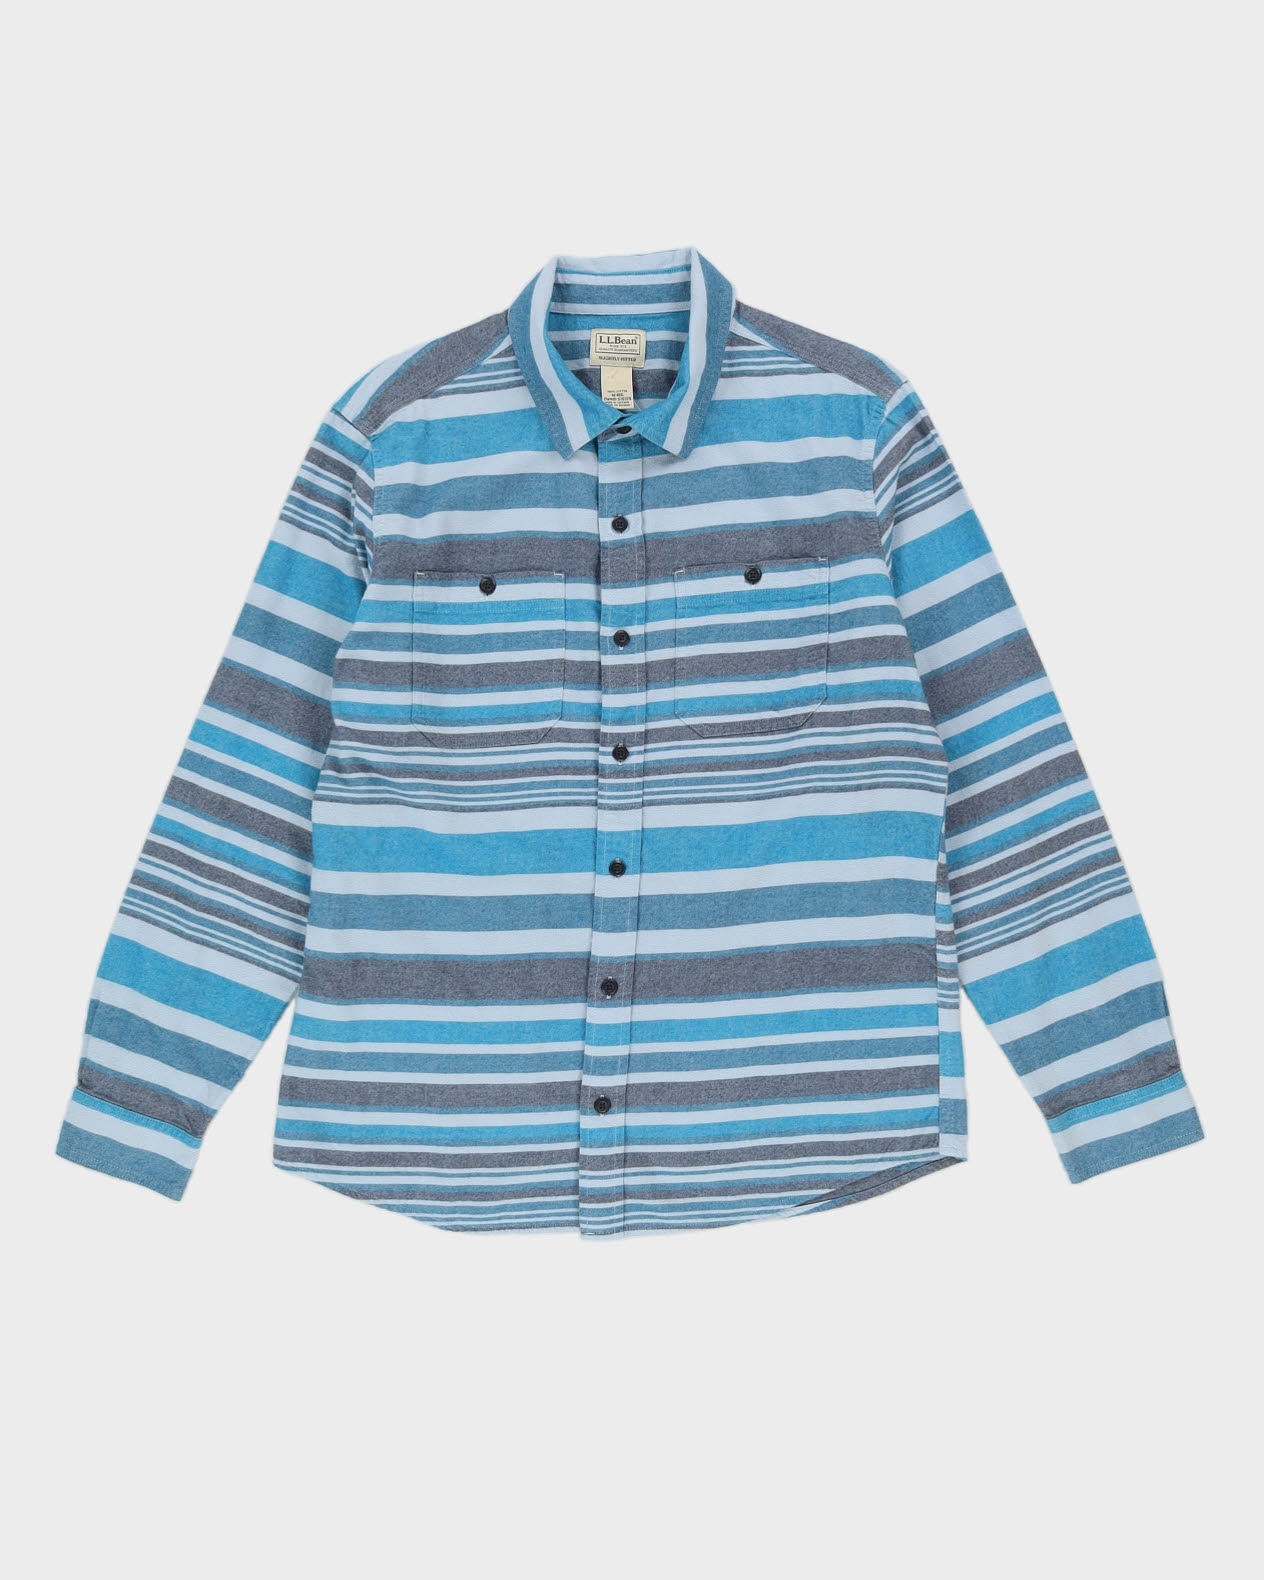 L.L Bean Striped Patterned Flannel Shirt - M